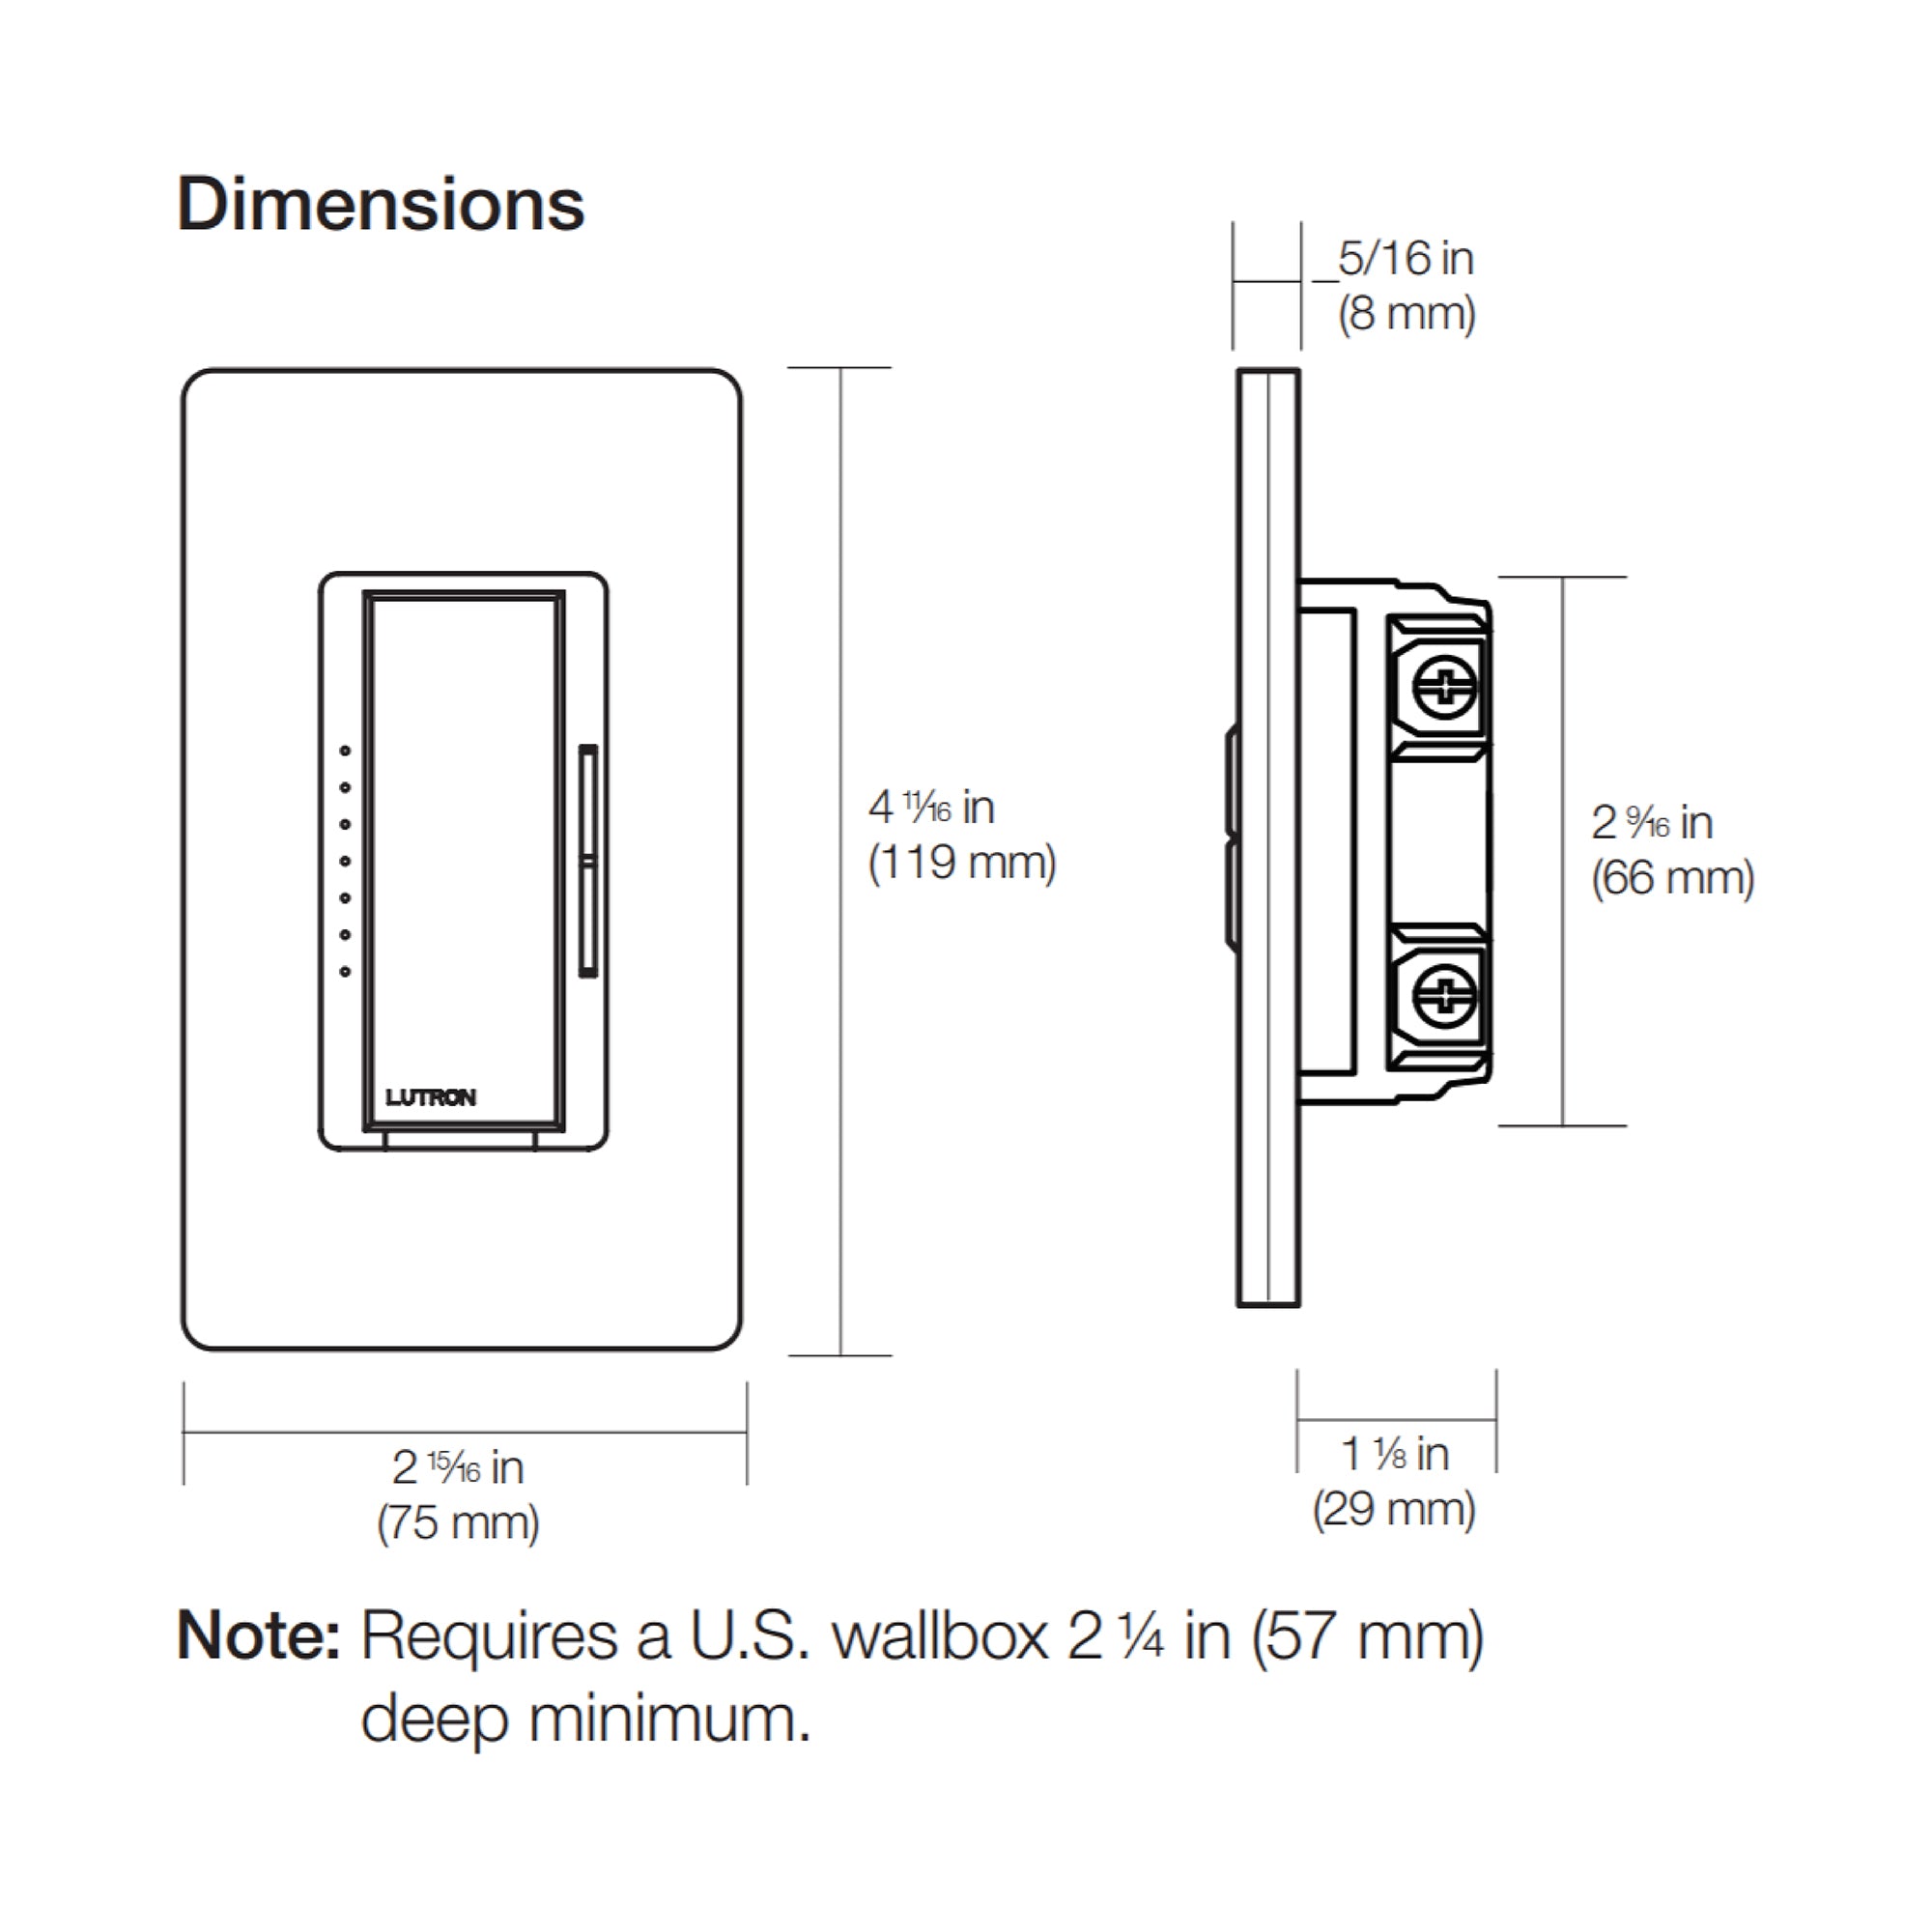 Lutron Diva Single-pole/3-way LED Rocker Light Dimmer Switch with